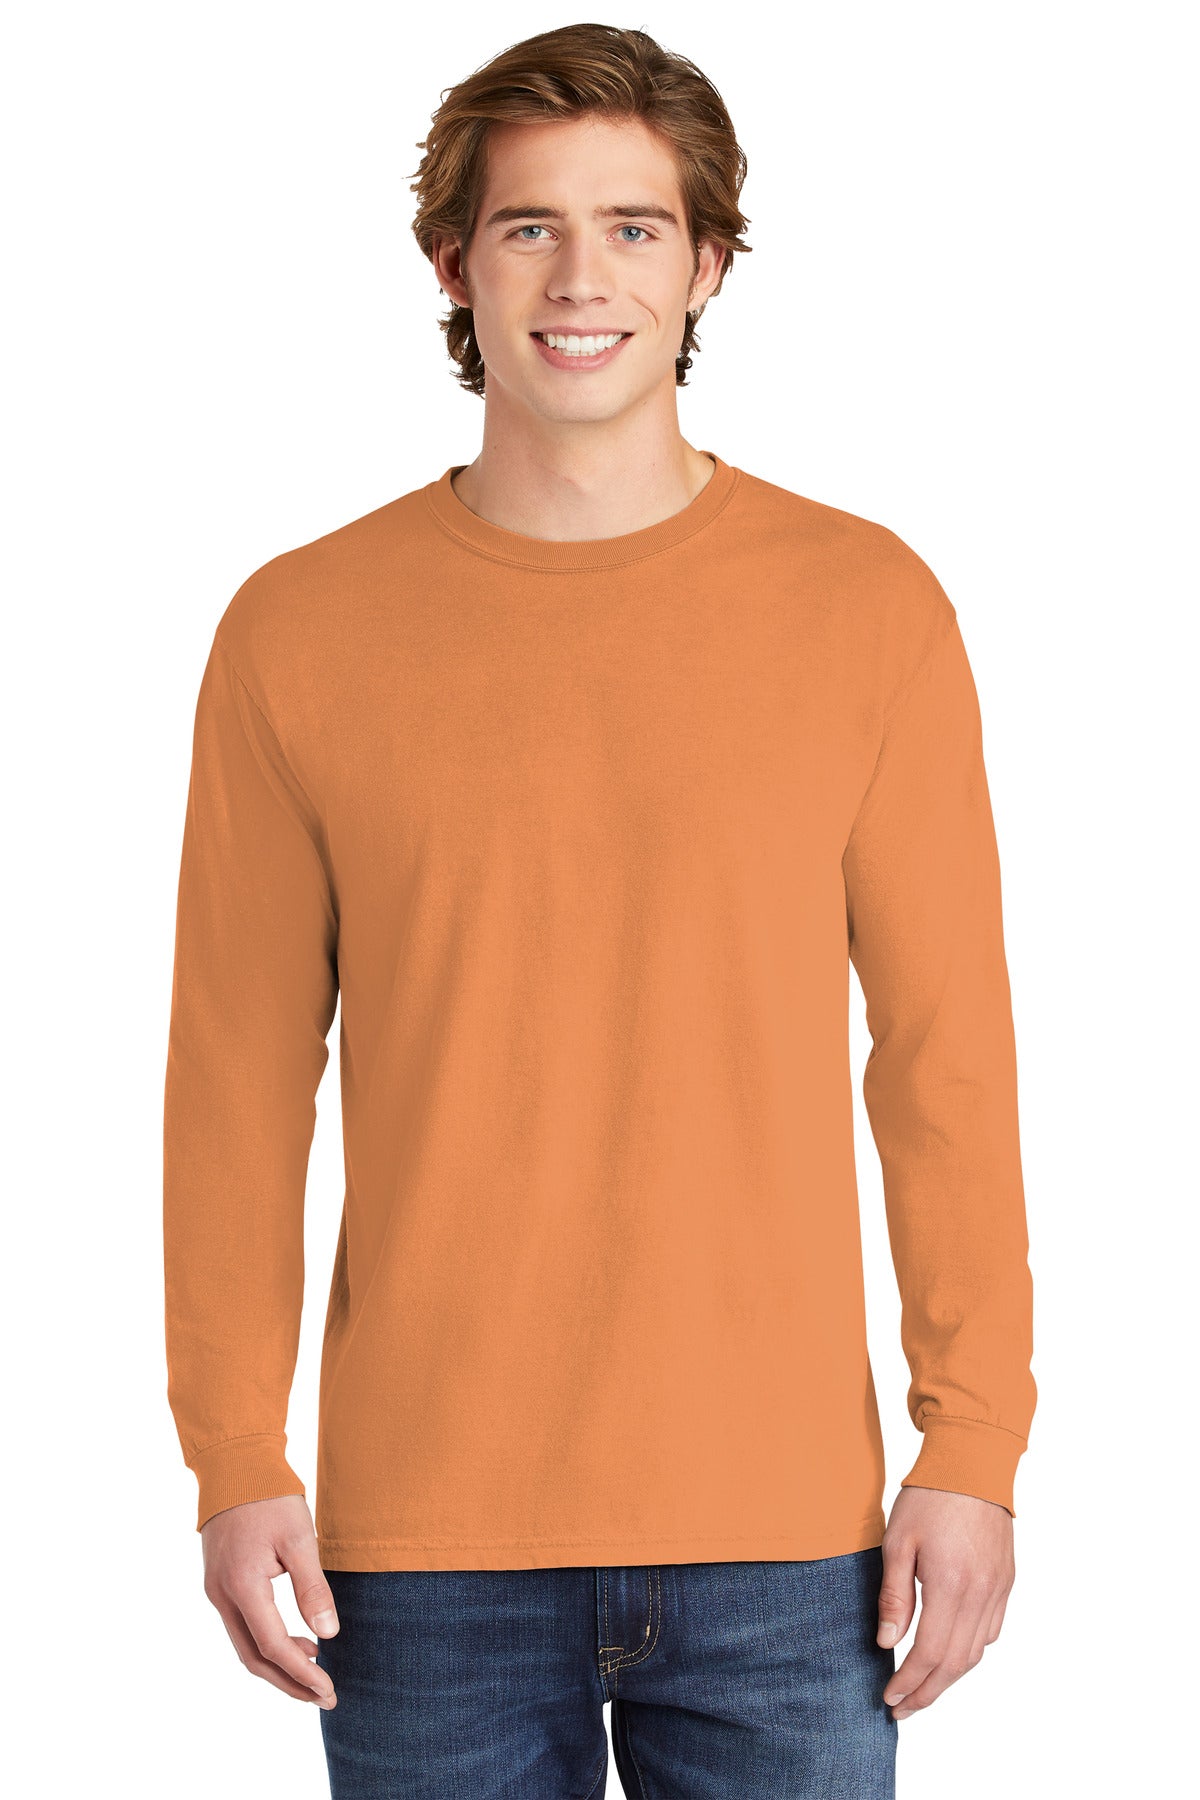 T-Shirts Burnt Orange Comfort Colors